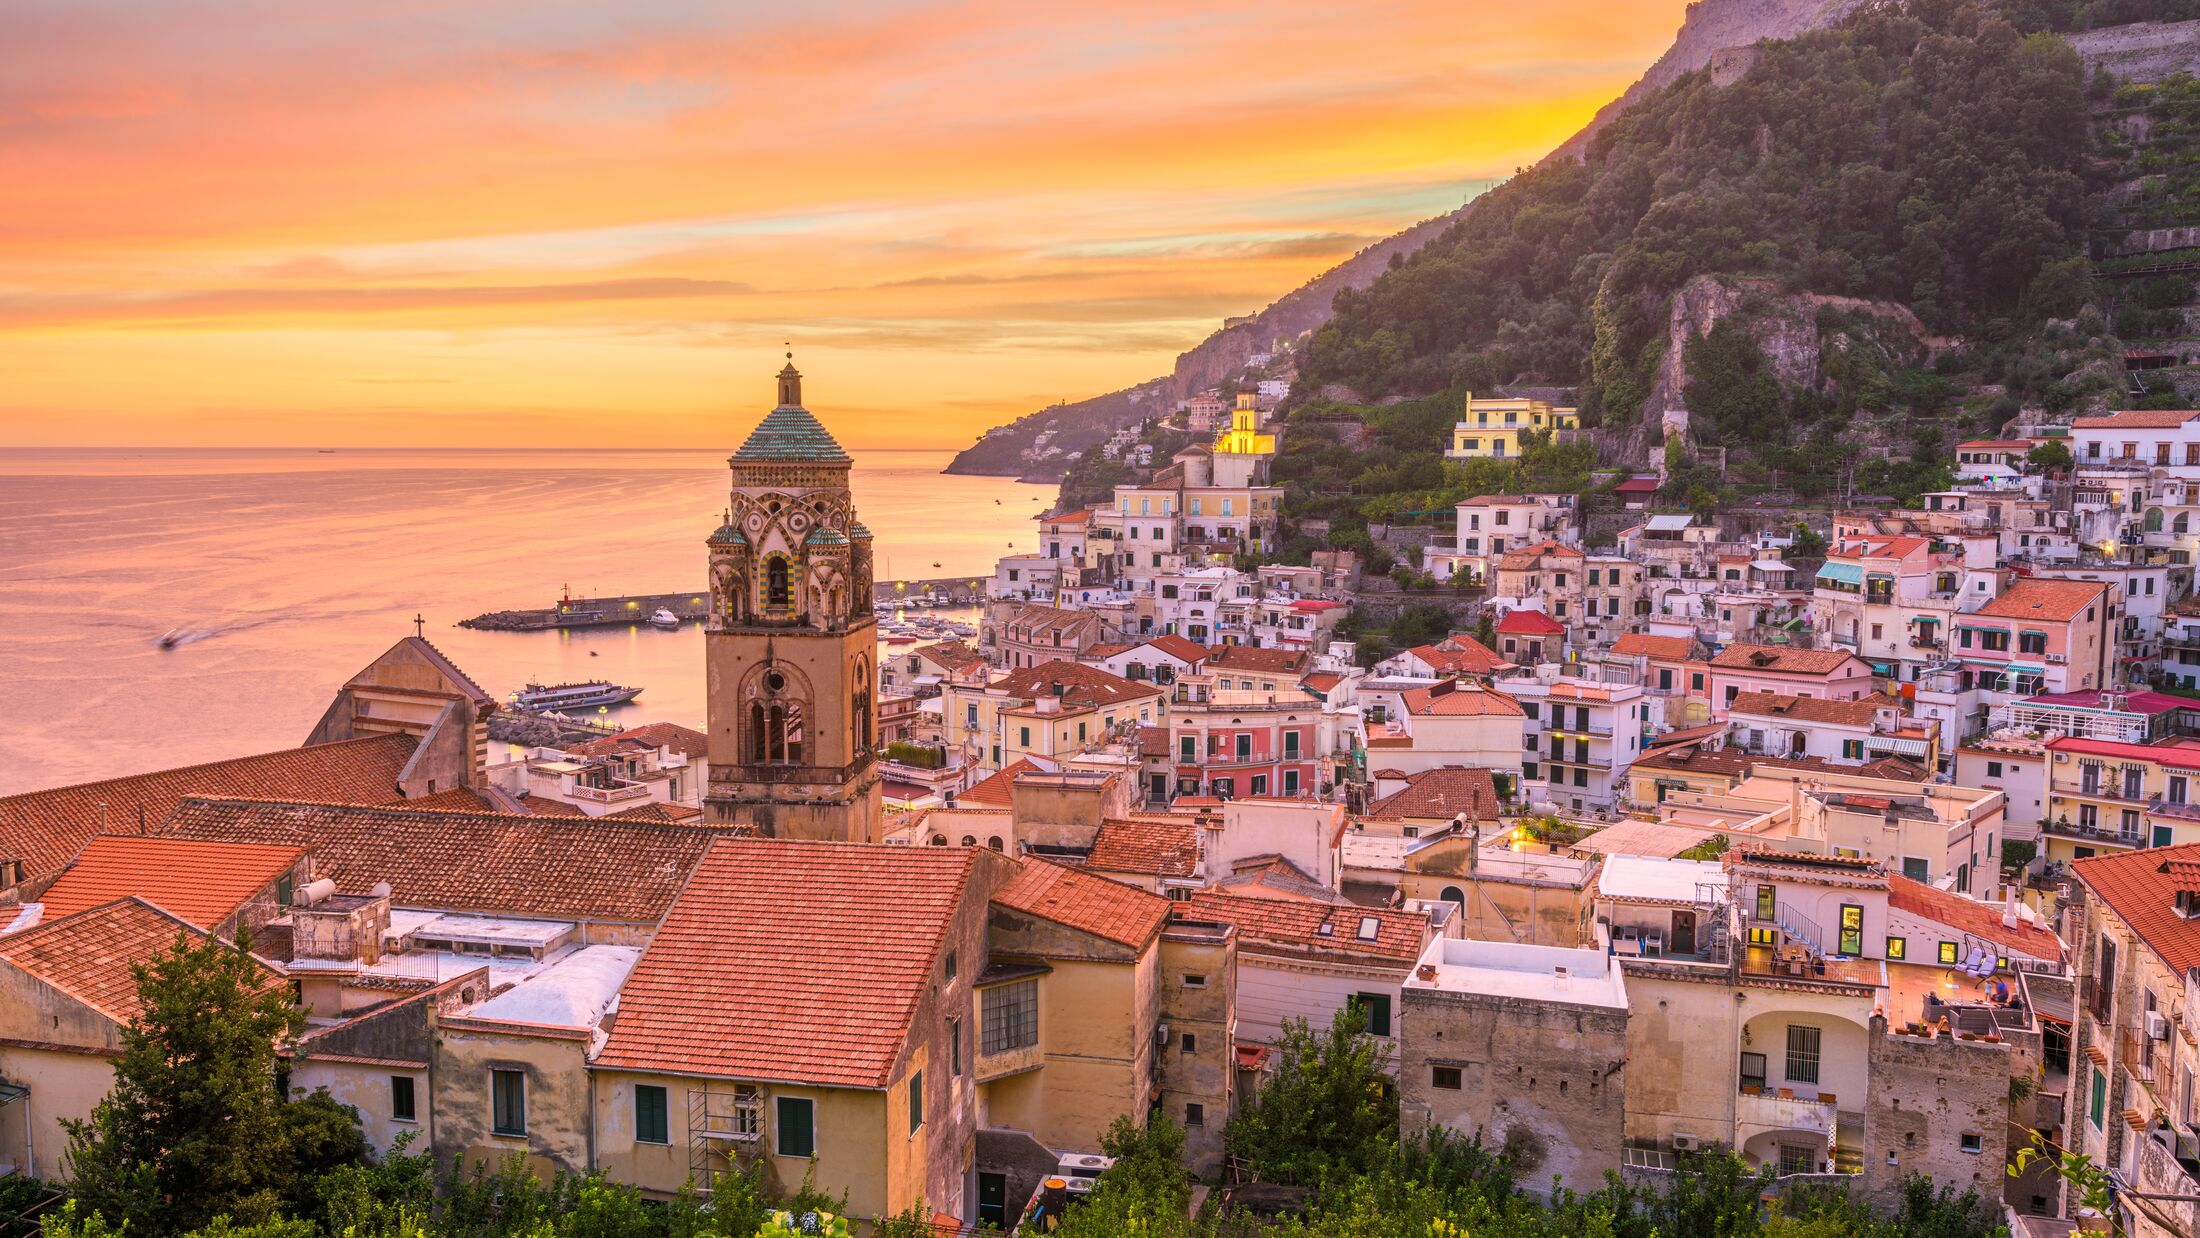 Amalfi, Italy on the Amalfi Coast at dusk.